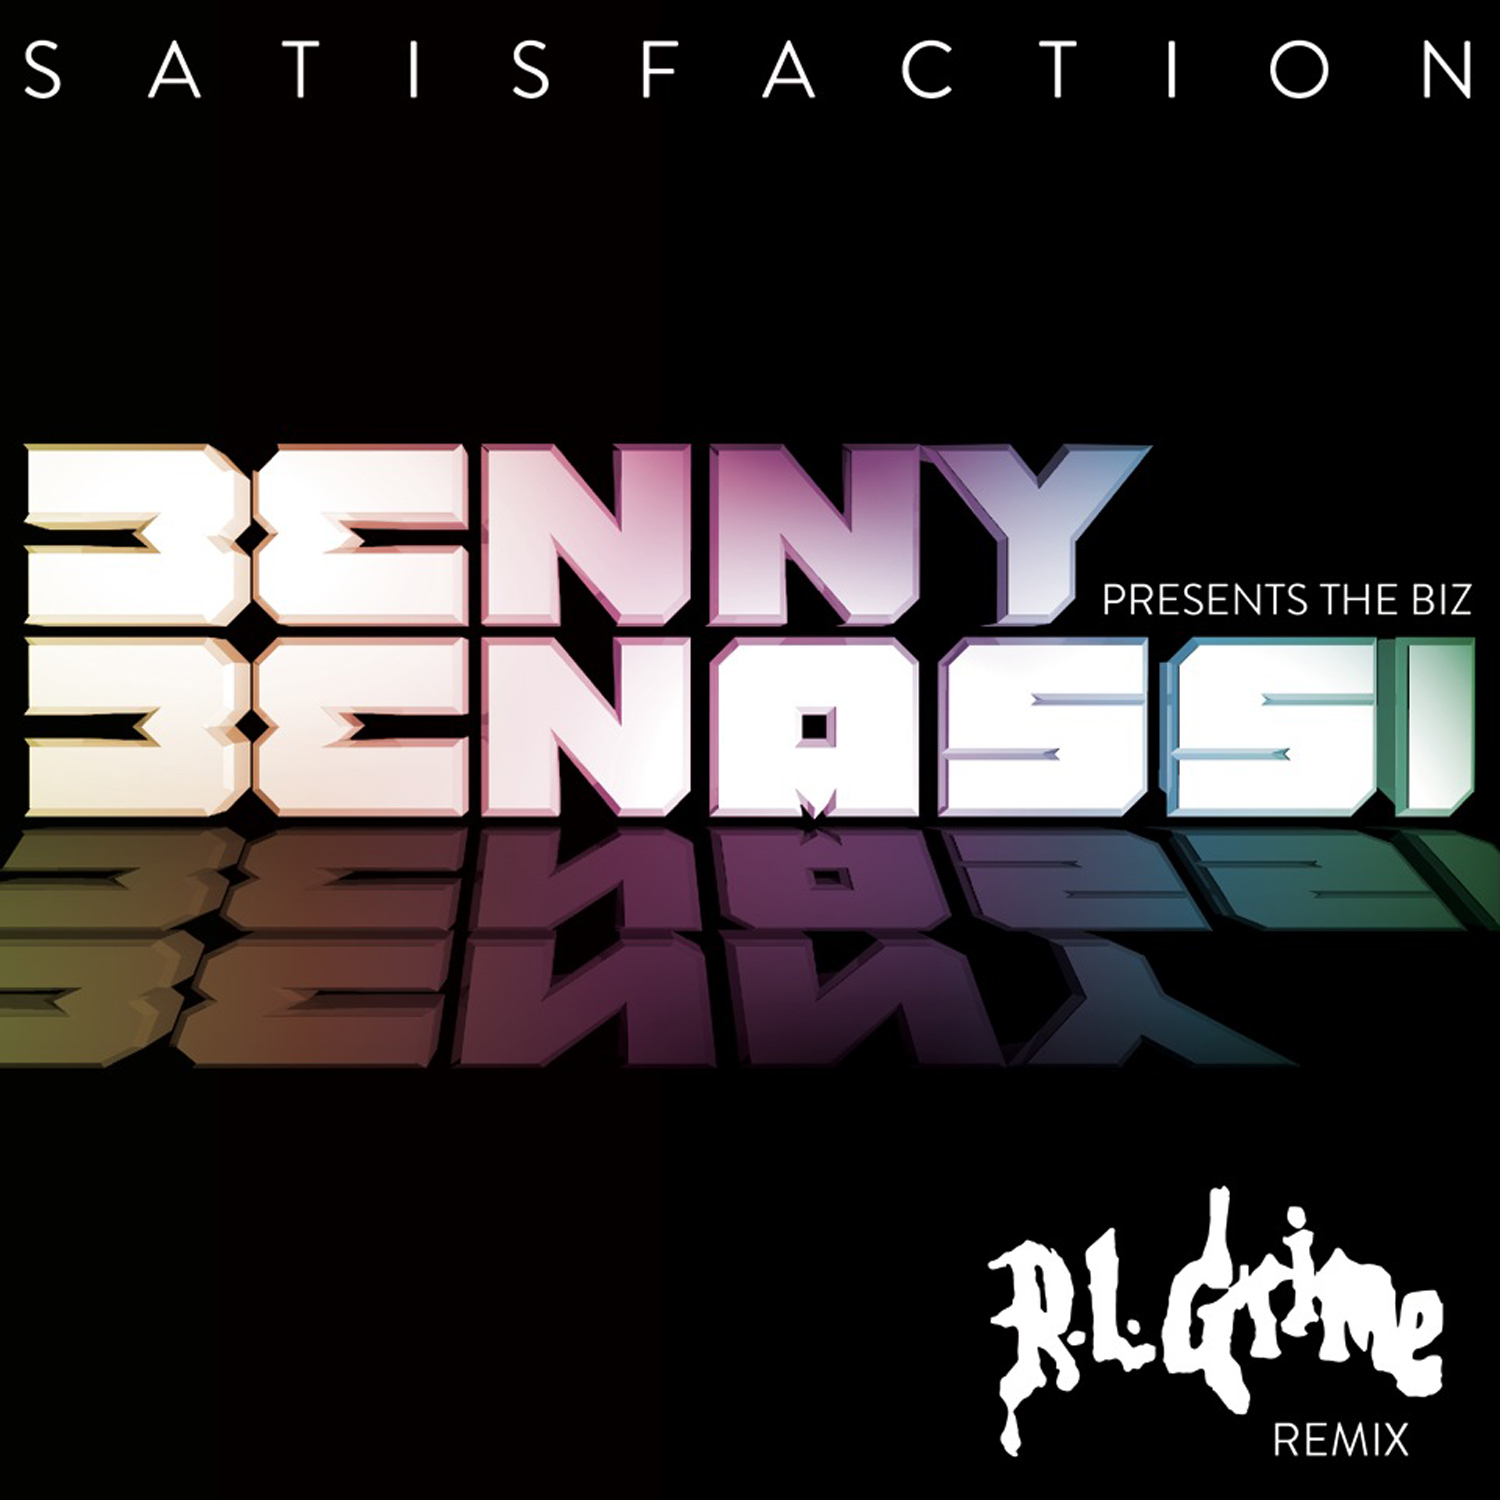 Parsisiųsti Satisfaction (RL Grime Remix) - Benny Benassi (Preview)